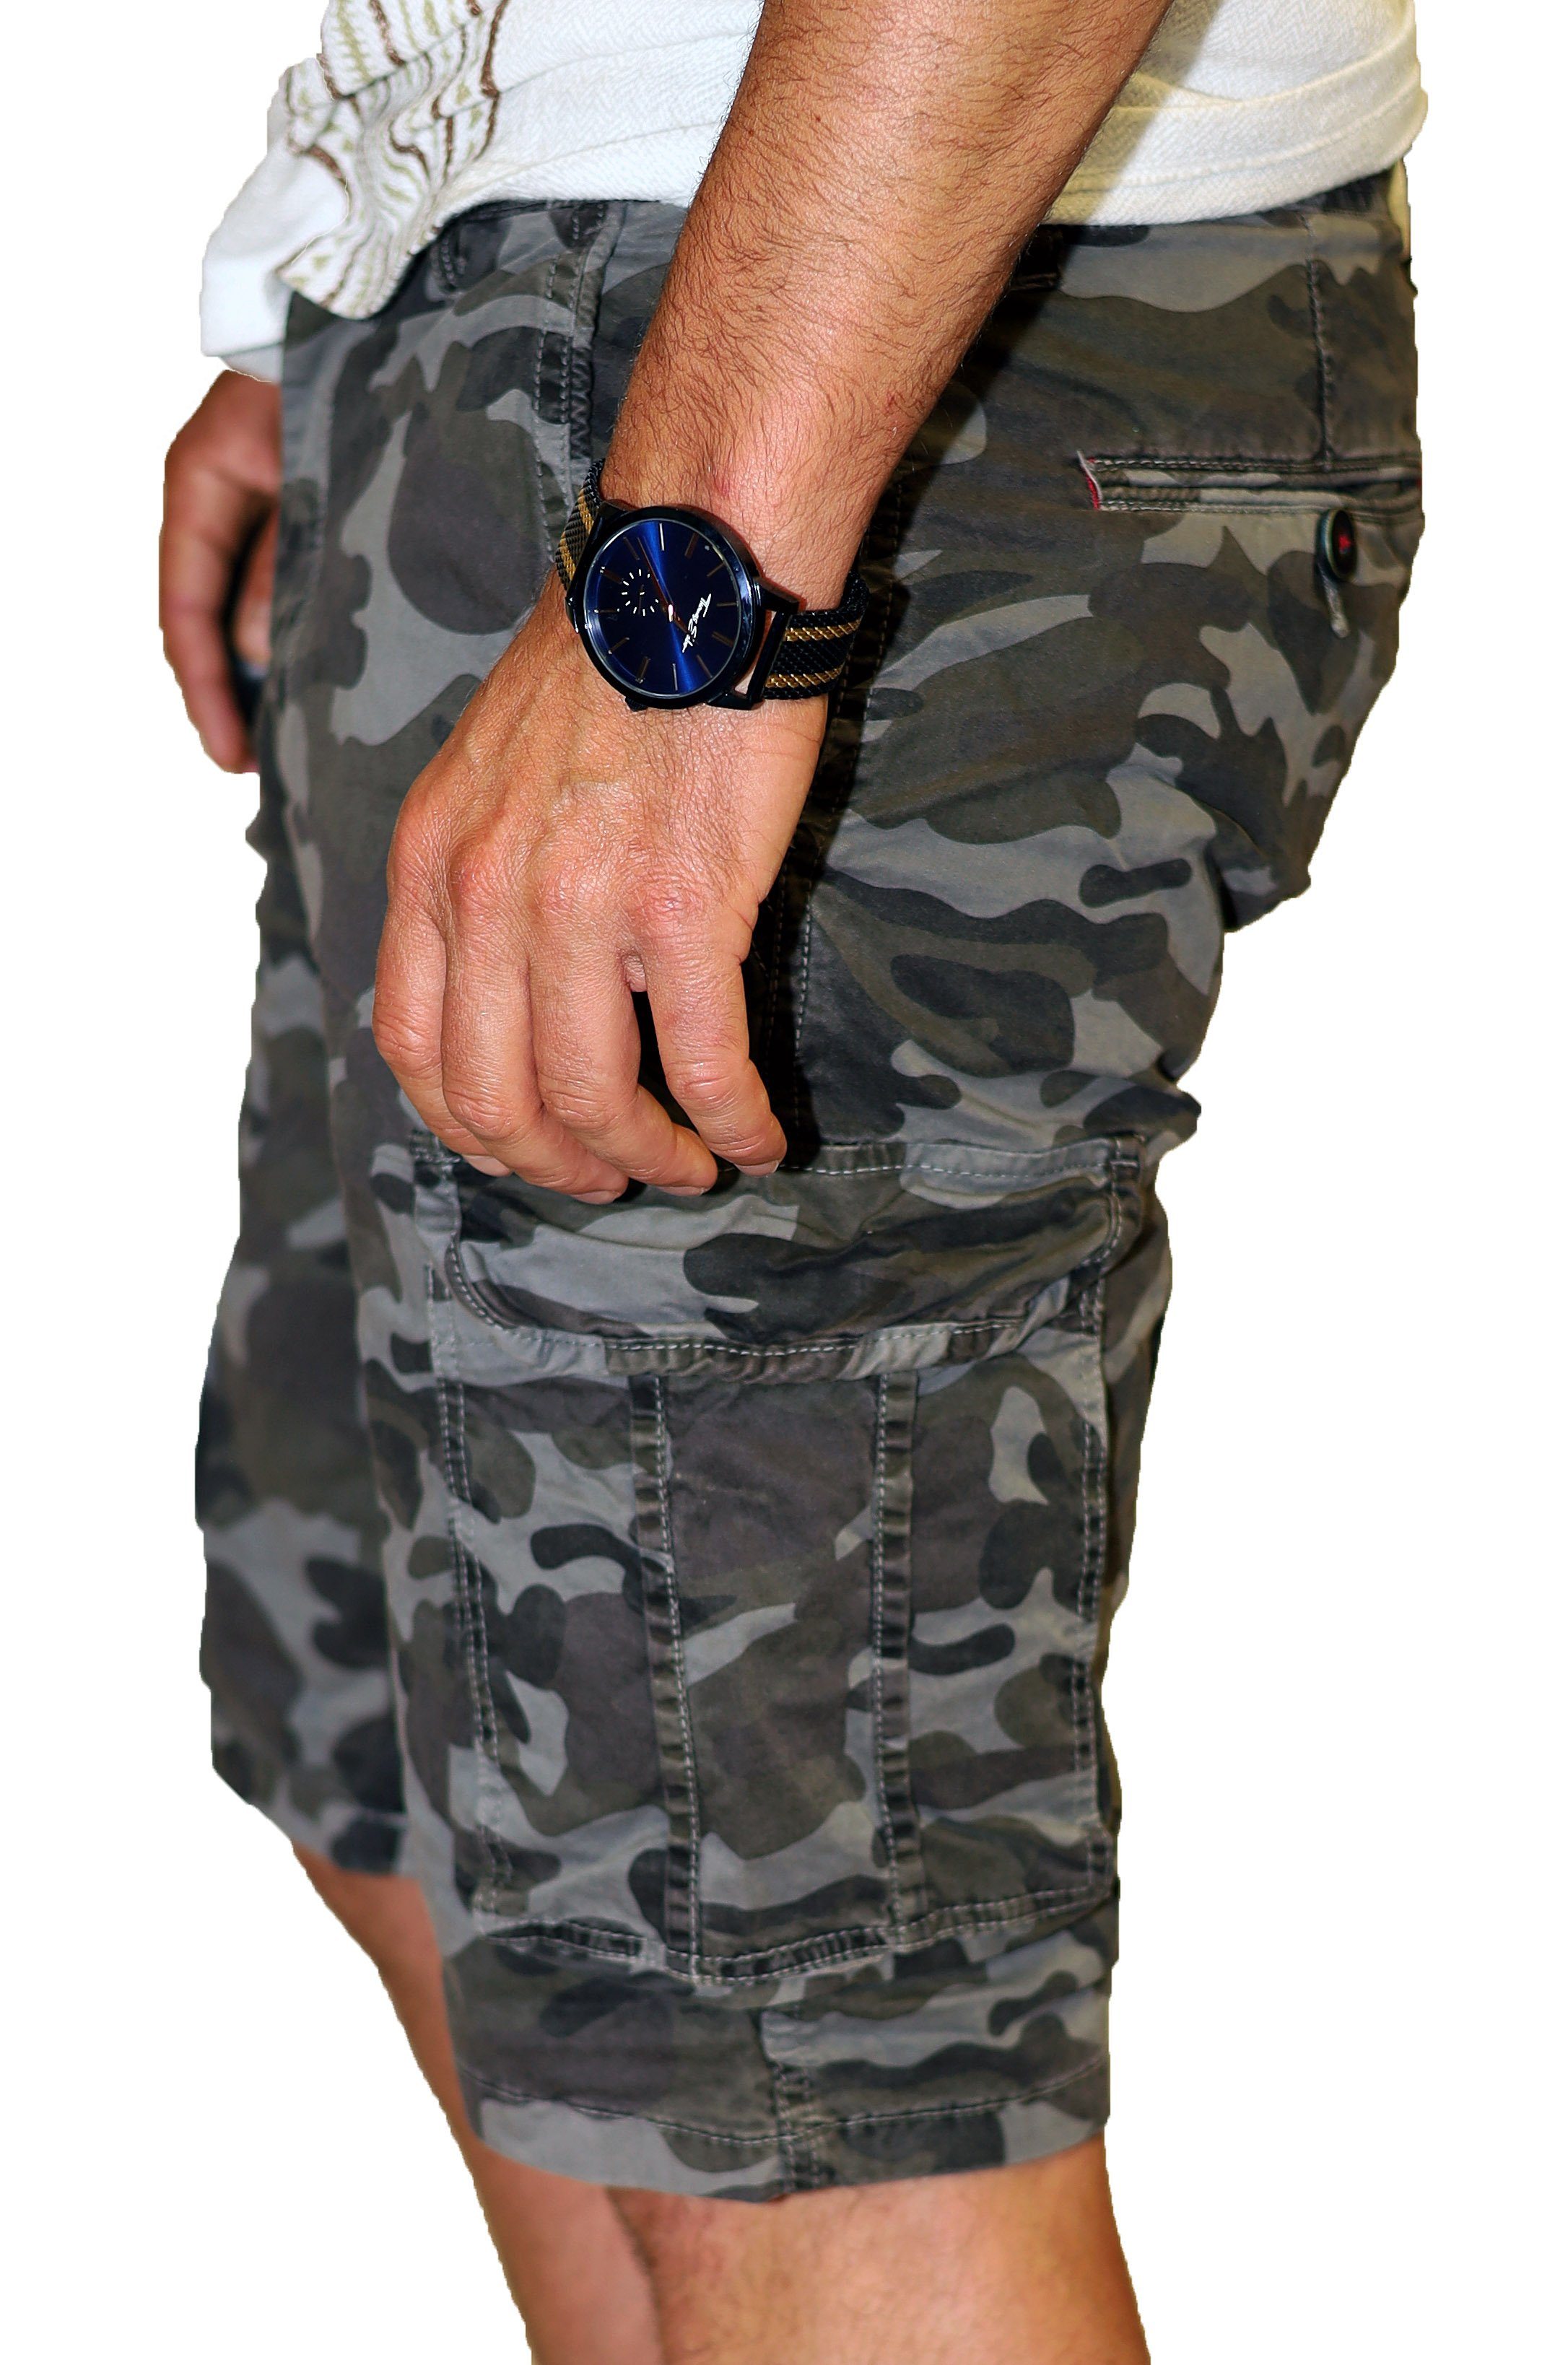 RMK Cargoshorts Herren Bermuda Baumwolle kurze Short aus Tarn Set Camouflage 100% Grau Hose Army Tarnfarben, in